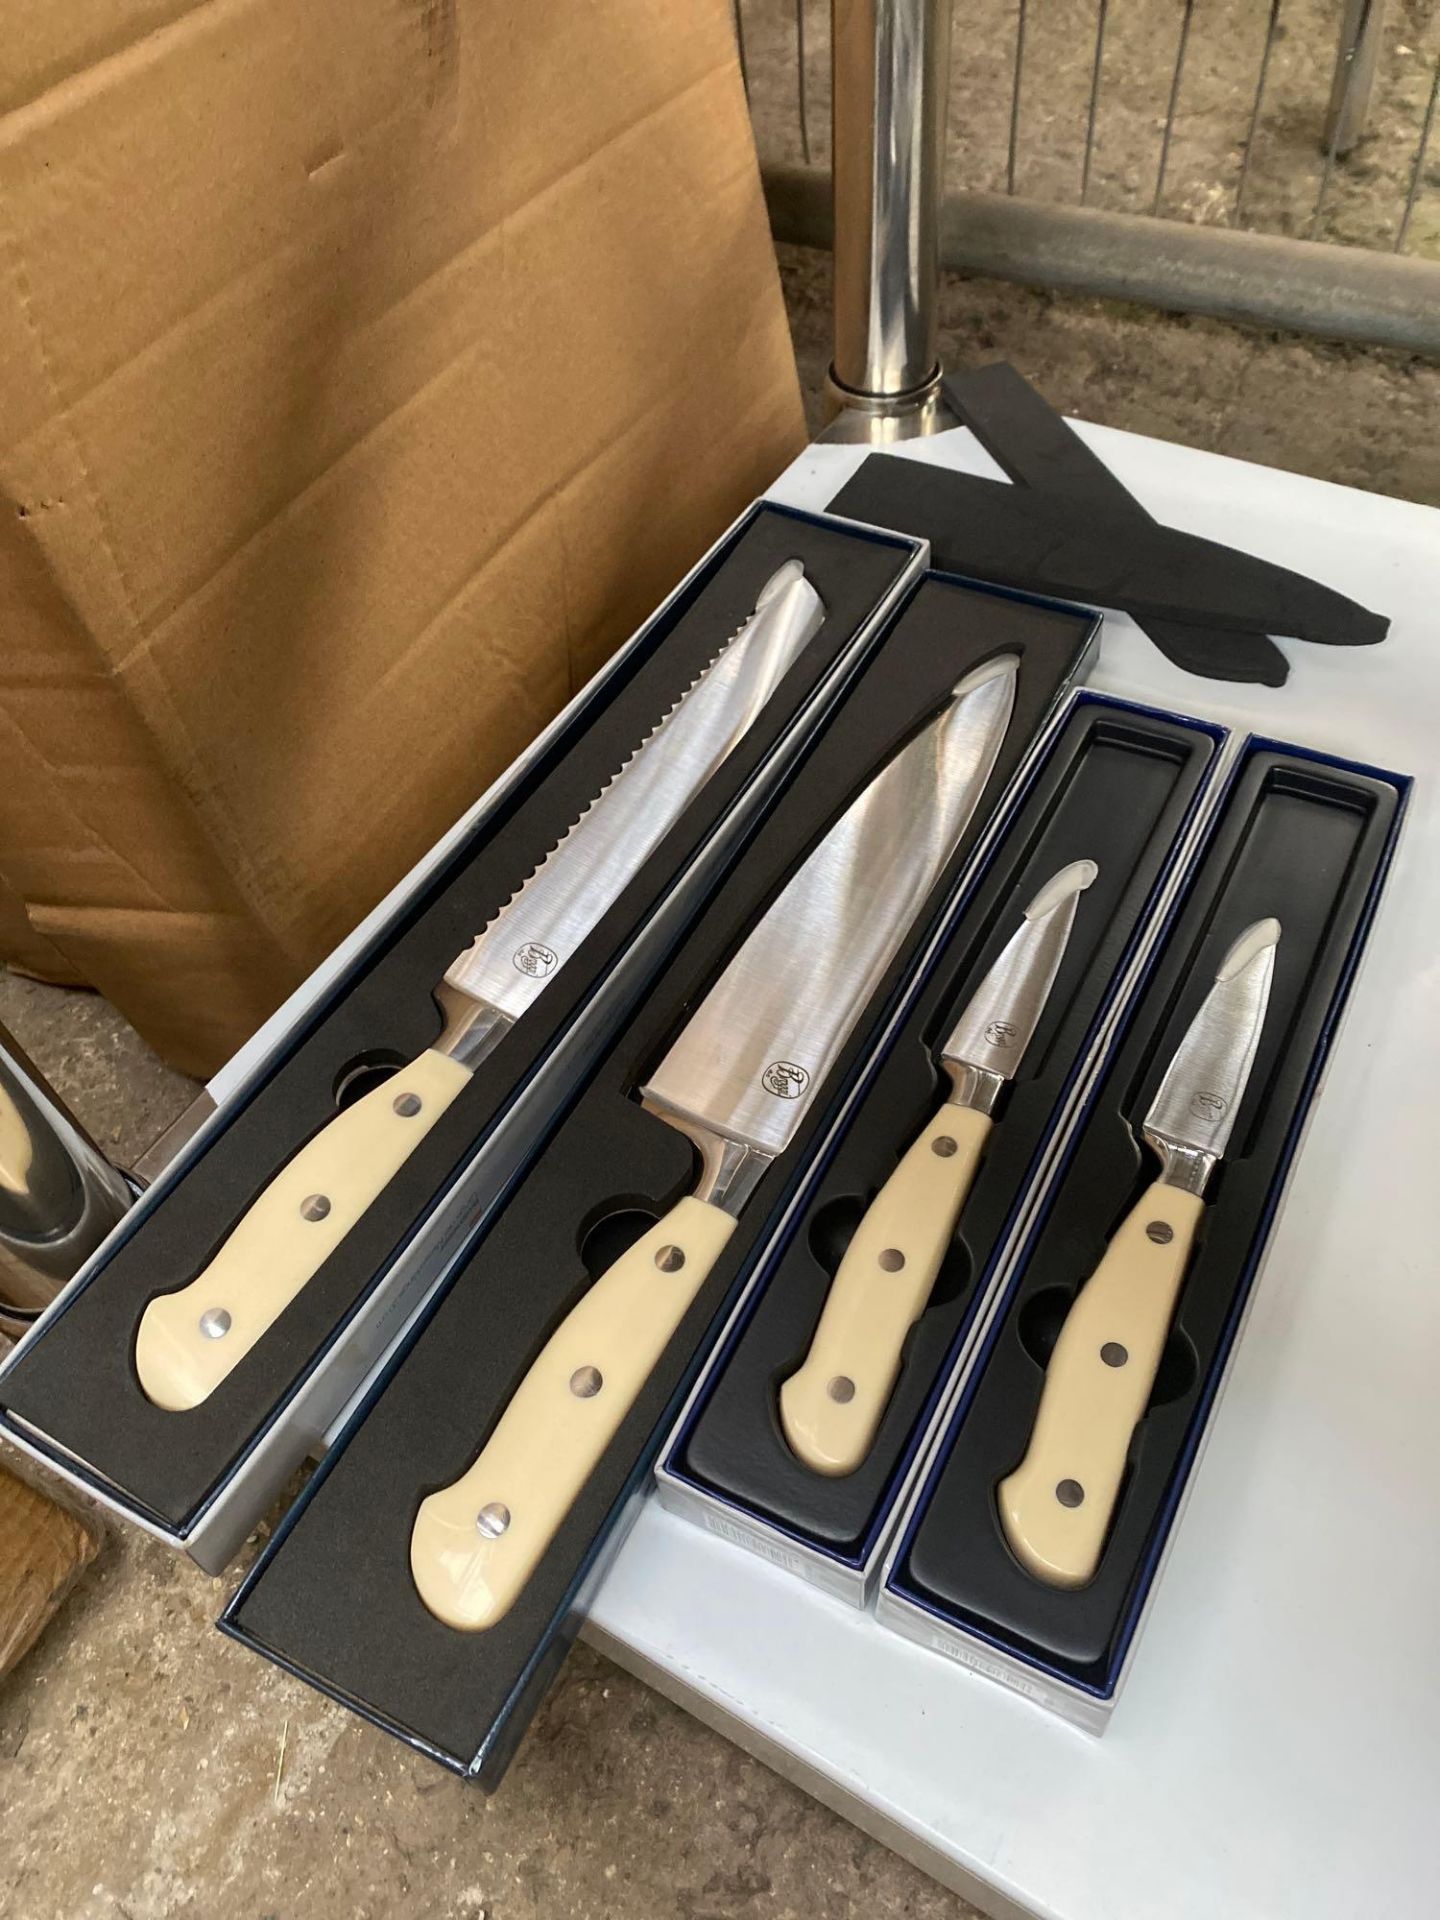 Four Broggi chef knives